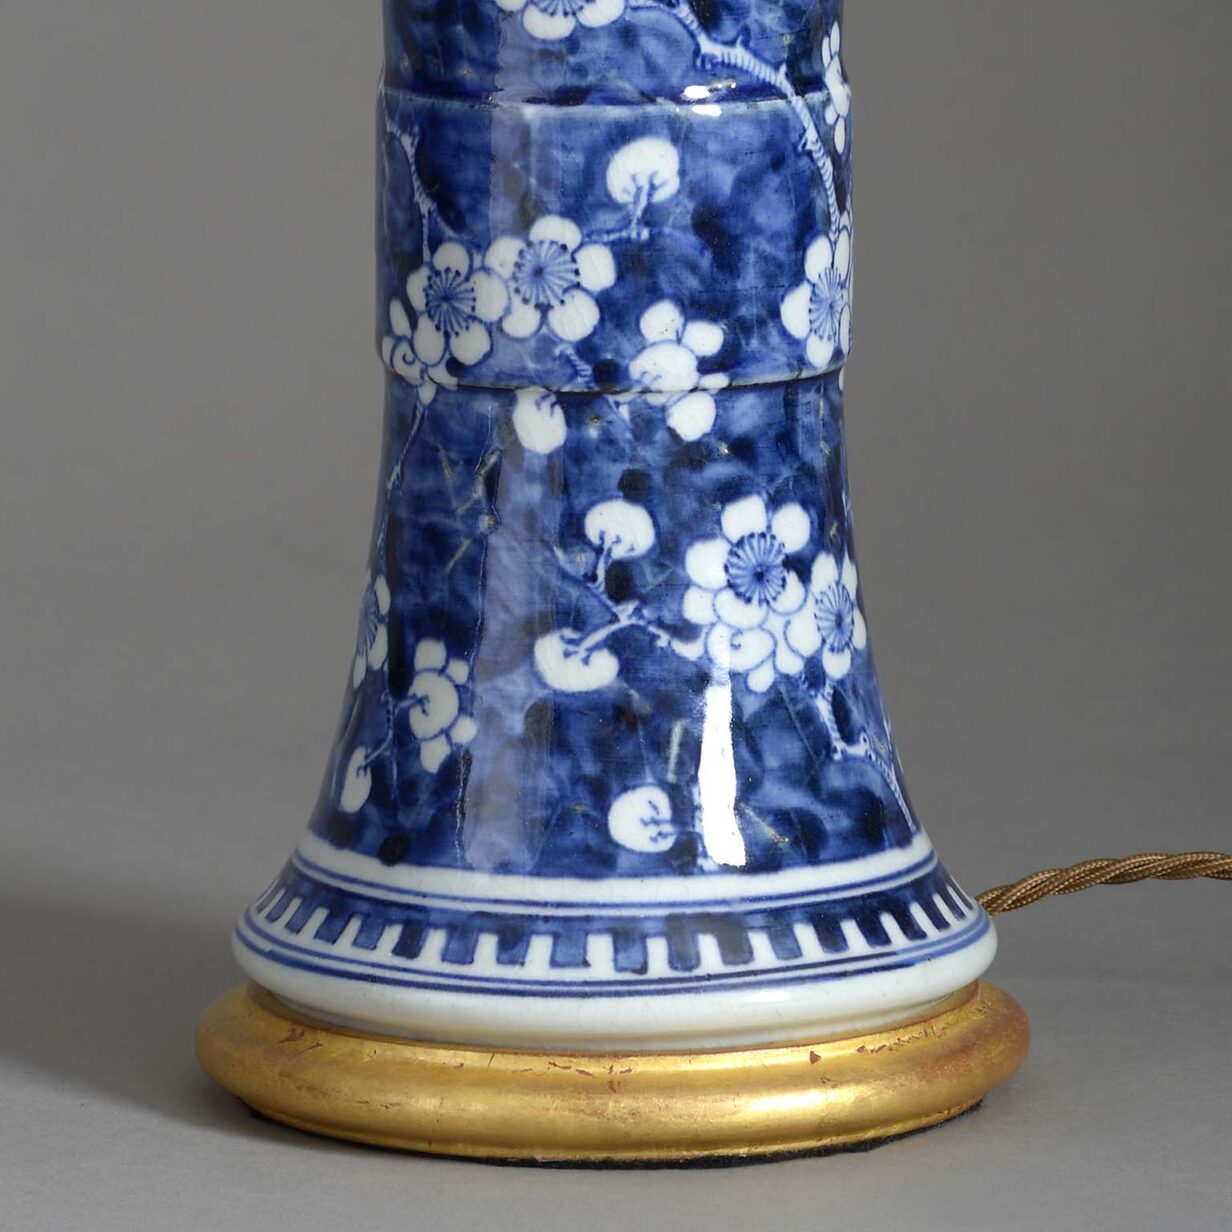 Pair of blue and white beaker vase lamps